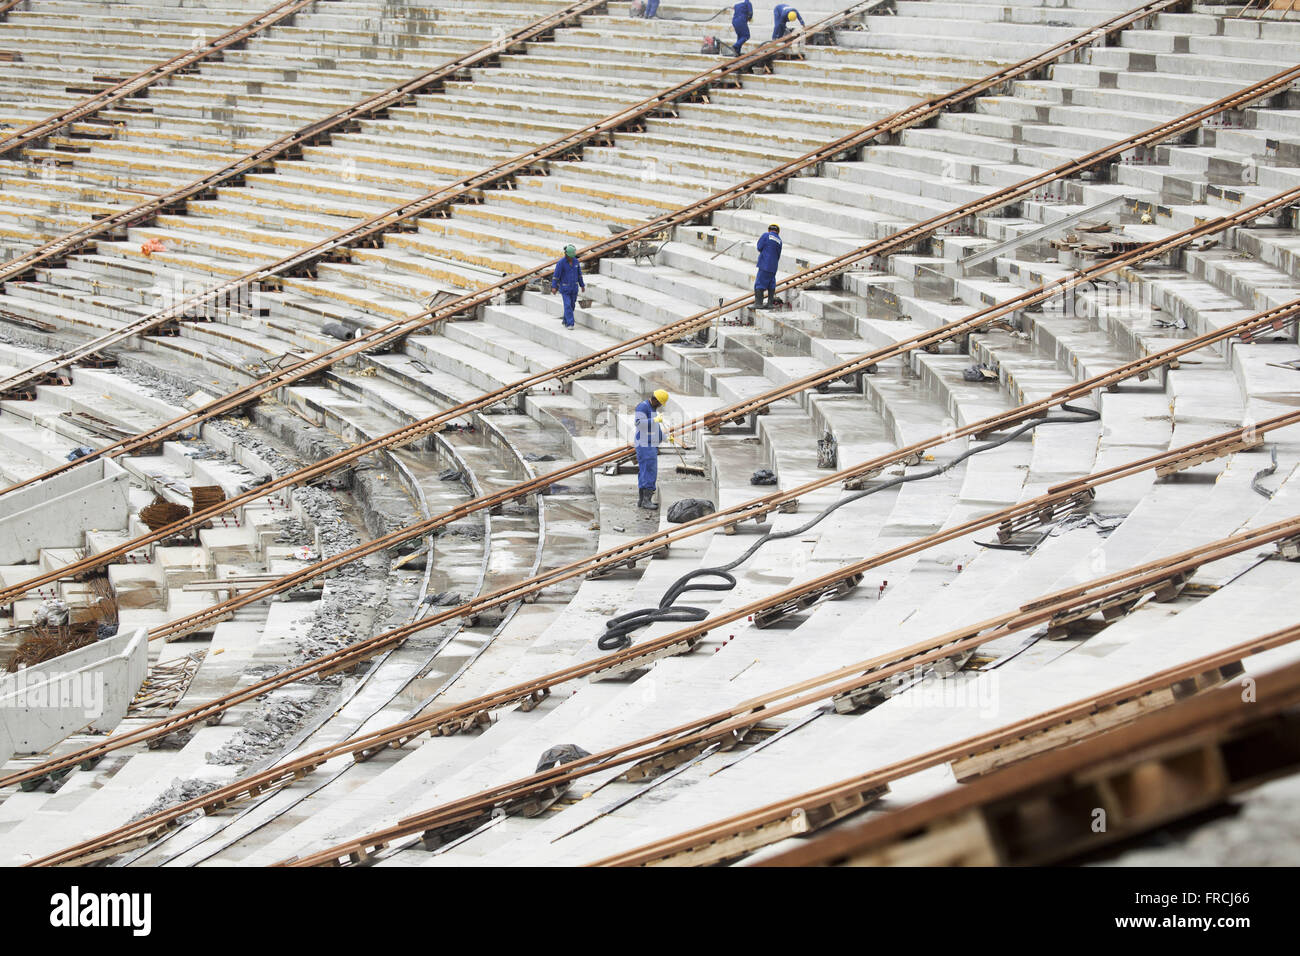 Estadio do Maracana in retirement for the World Cup 2014 Stock Photo